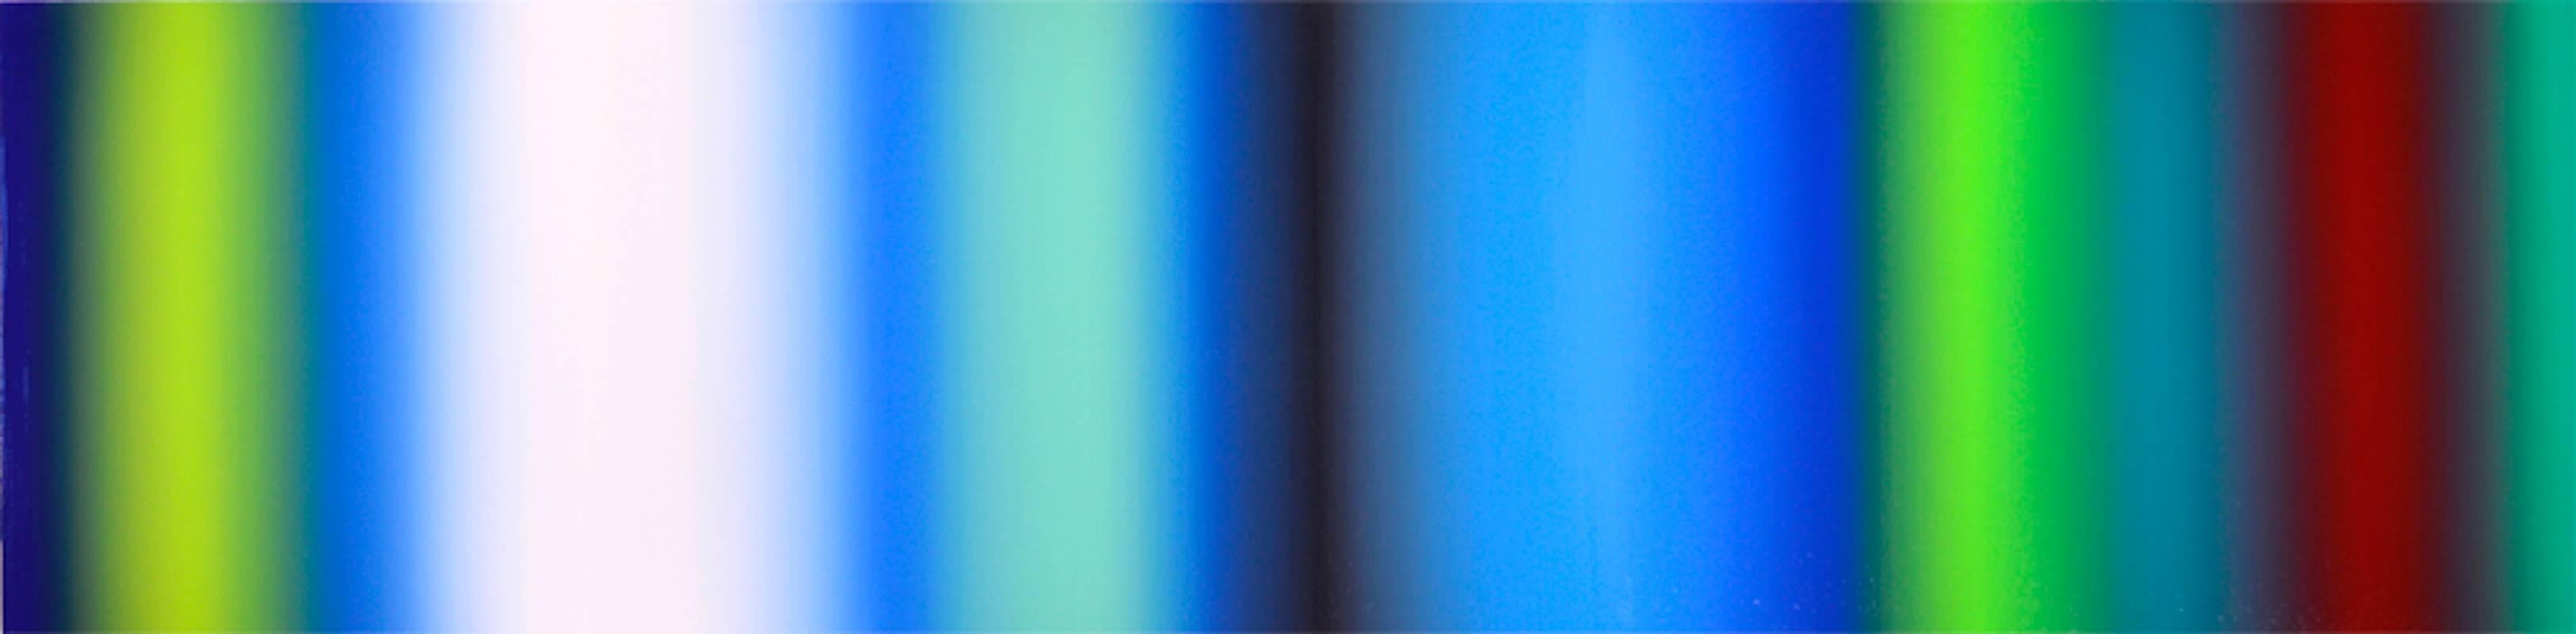 Patrick Dintino Abstract Painting – Broadband - großes, lebhaftes, leuchtend blaues und grünes, abstraktes Ölgemälde in Farbmischung